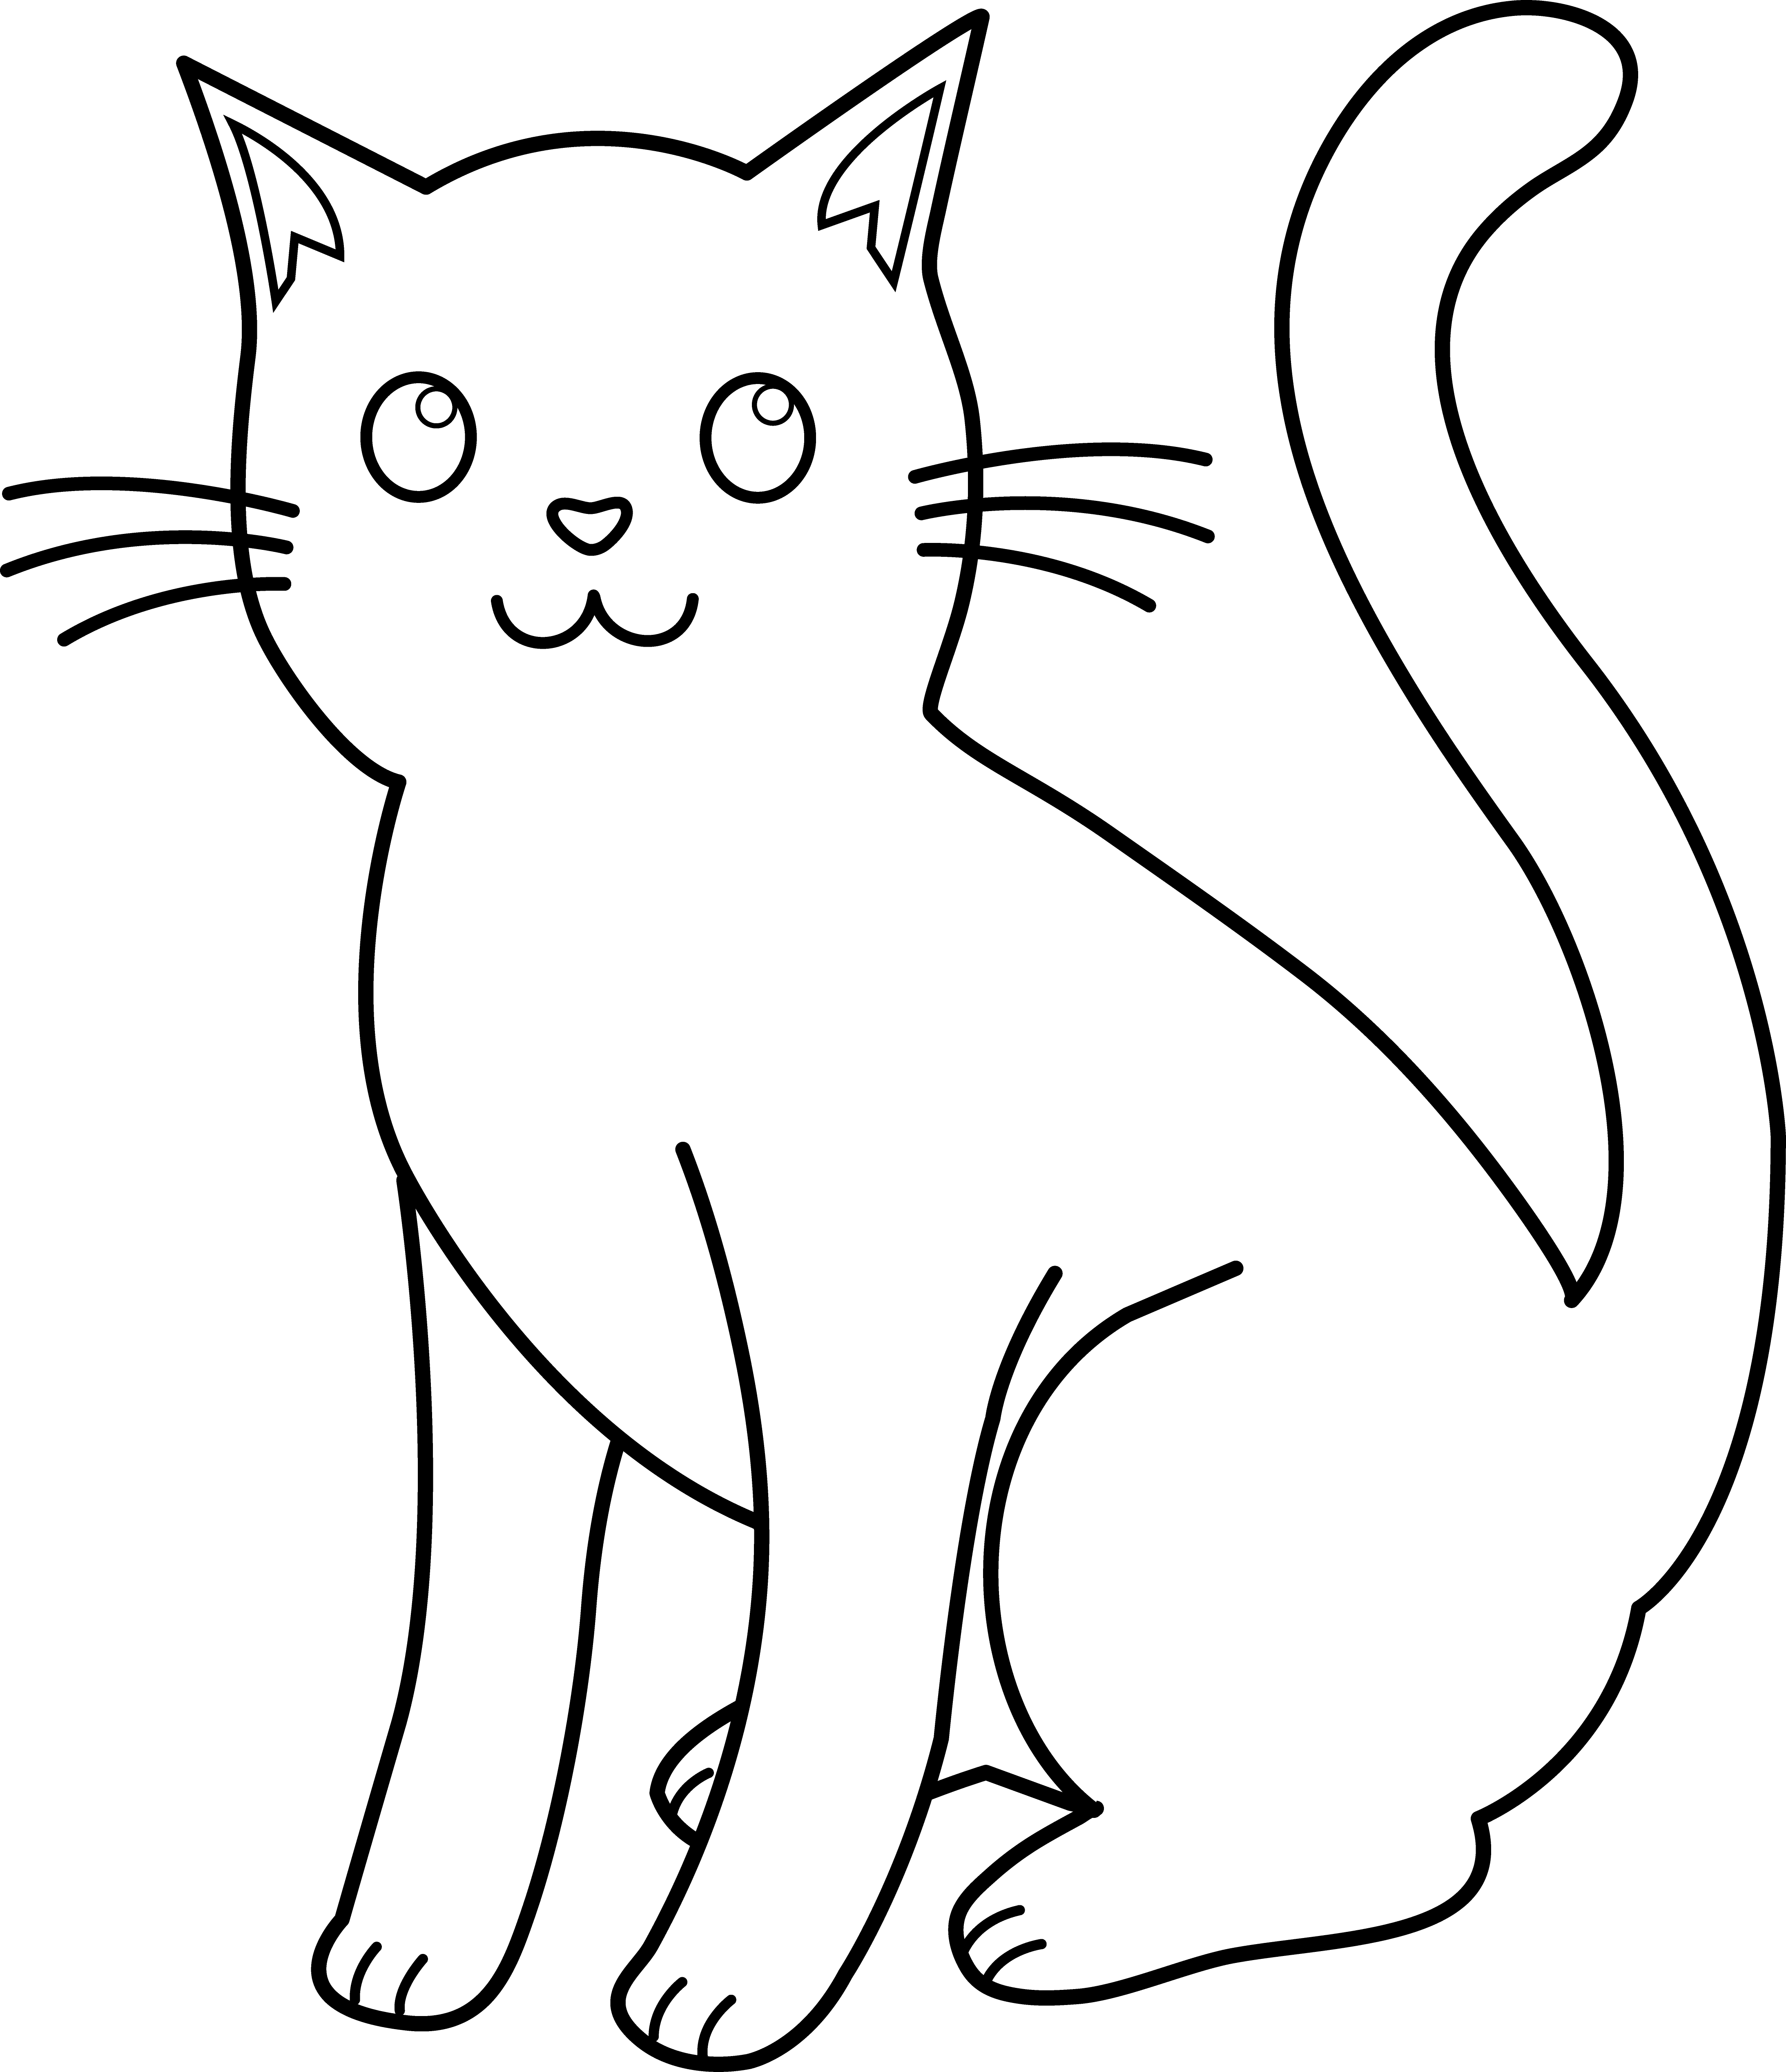 Cat silhouette line drawing illustration 8 - Stock Illustration [87693916]  - PIXTA